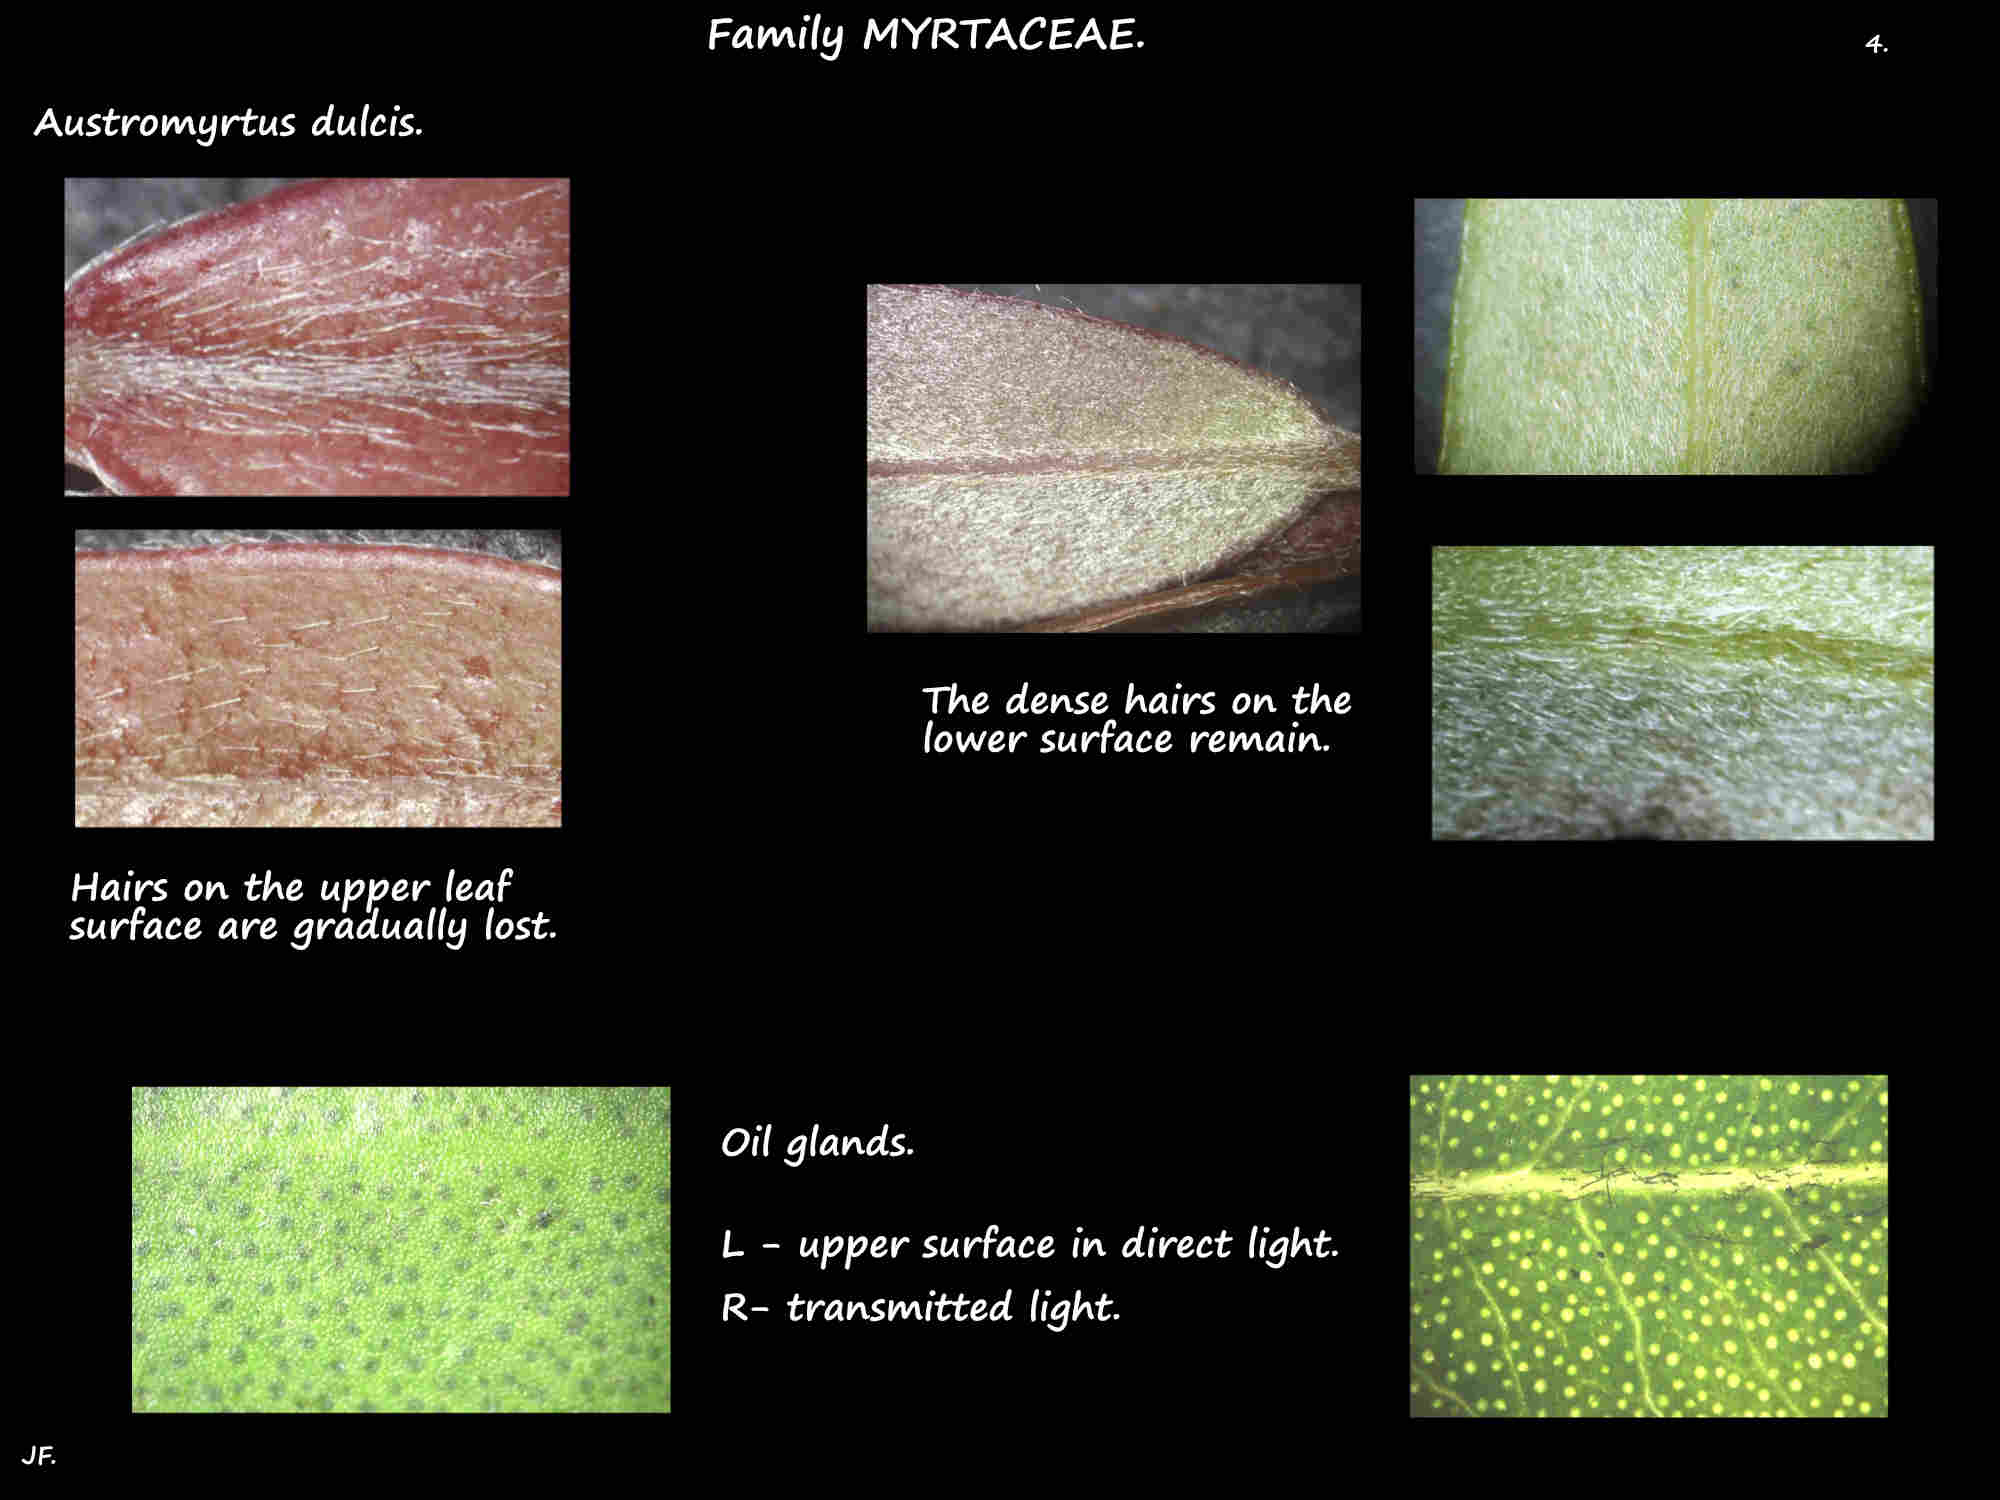 4 Austromyrtus dulcis leaf hairs & oil glands